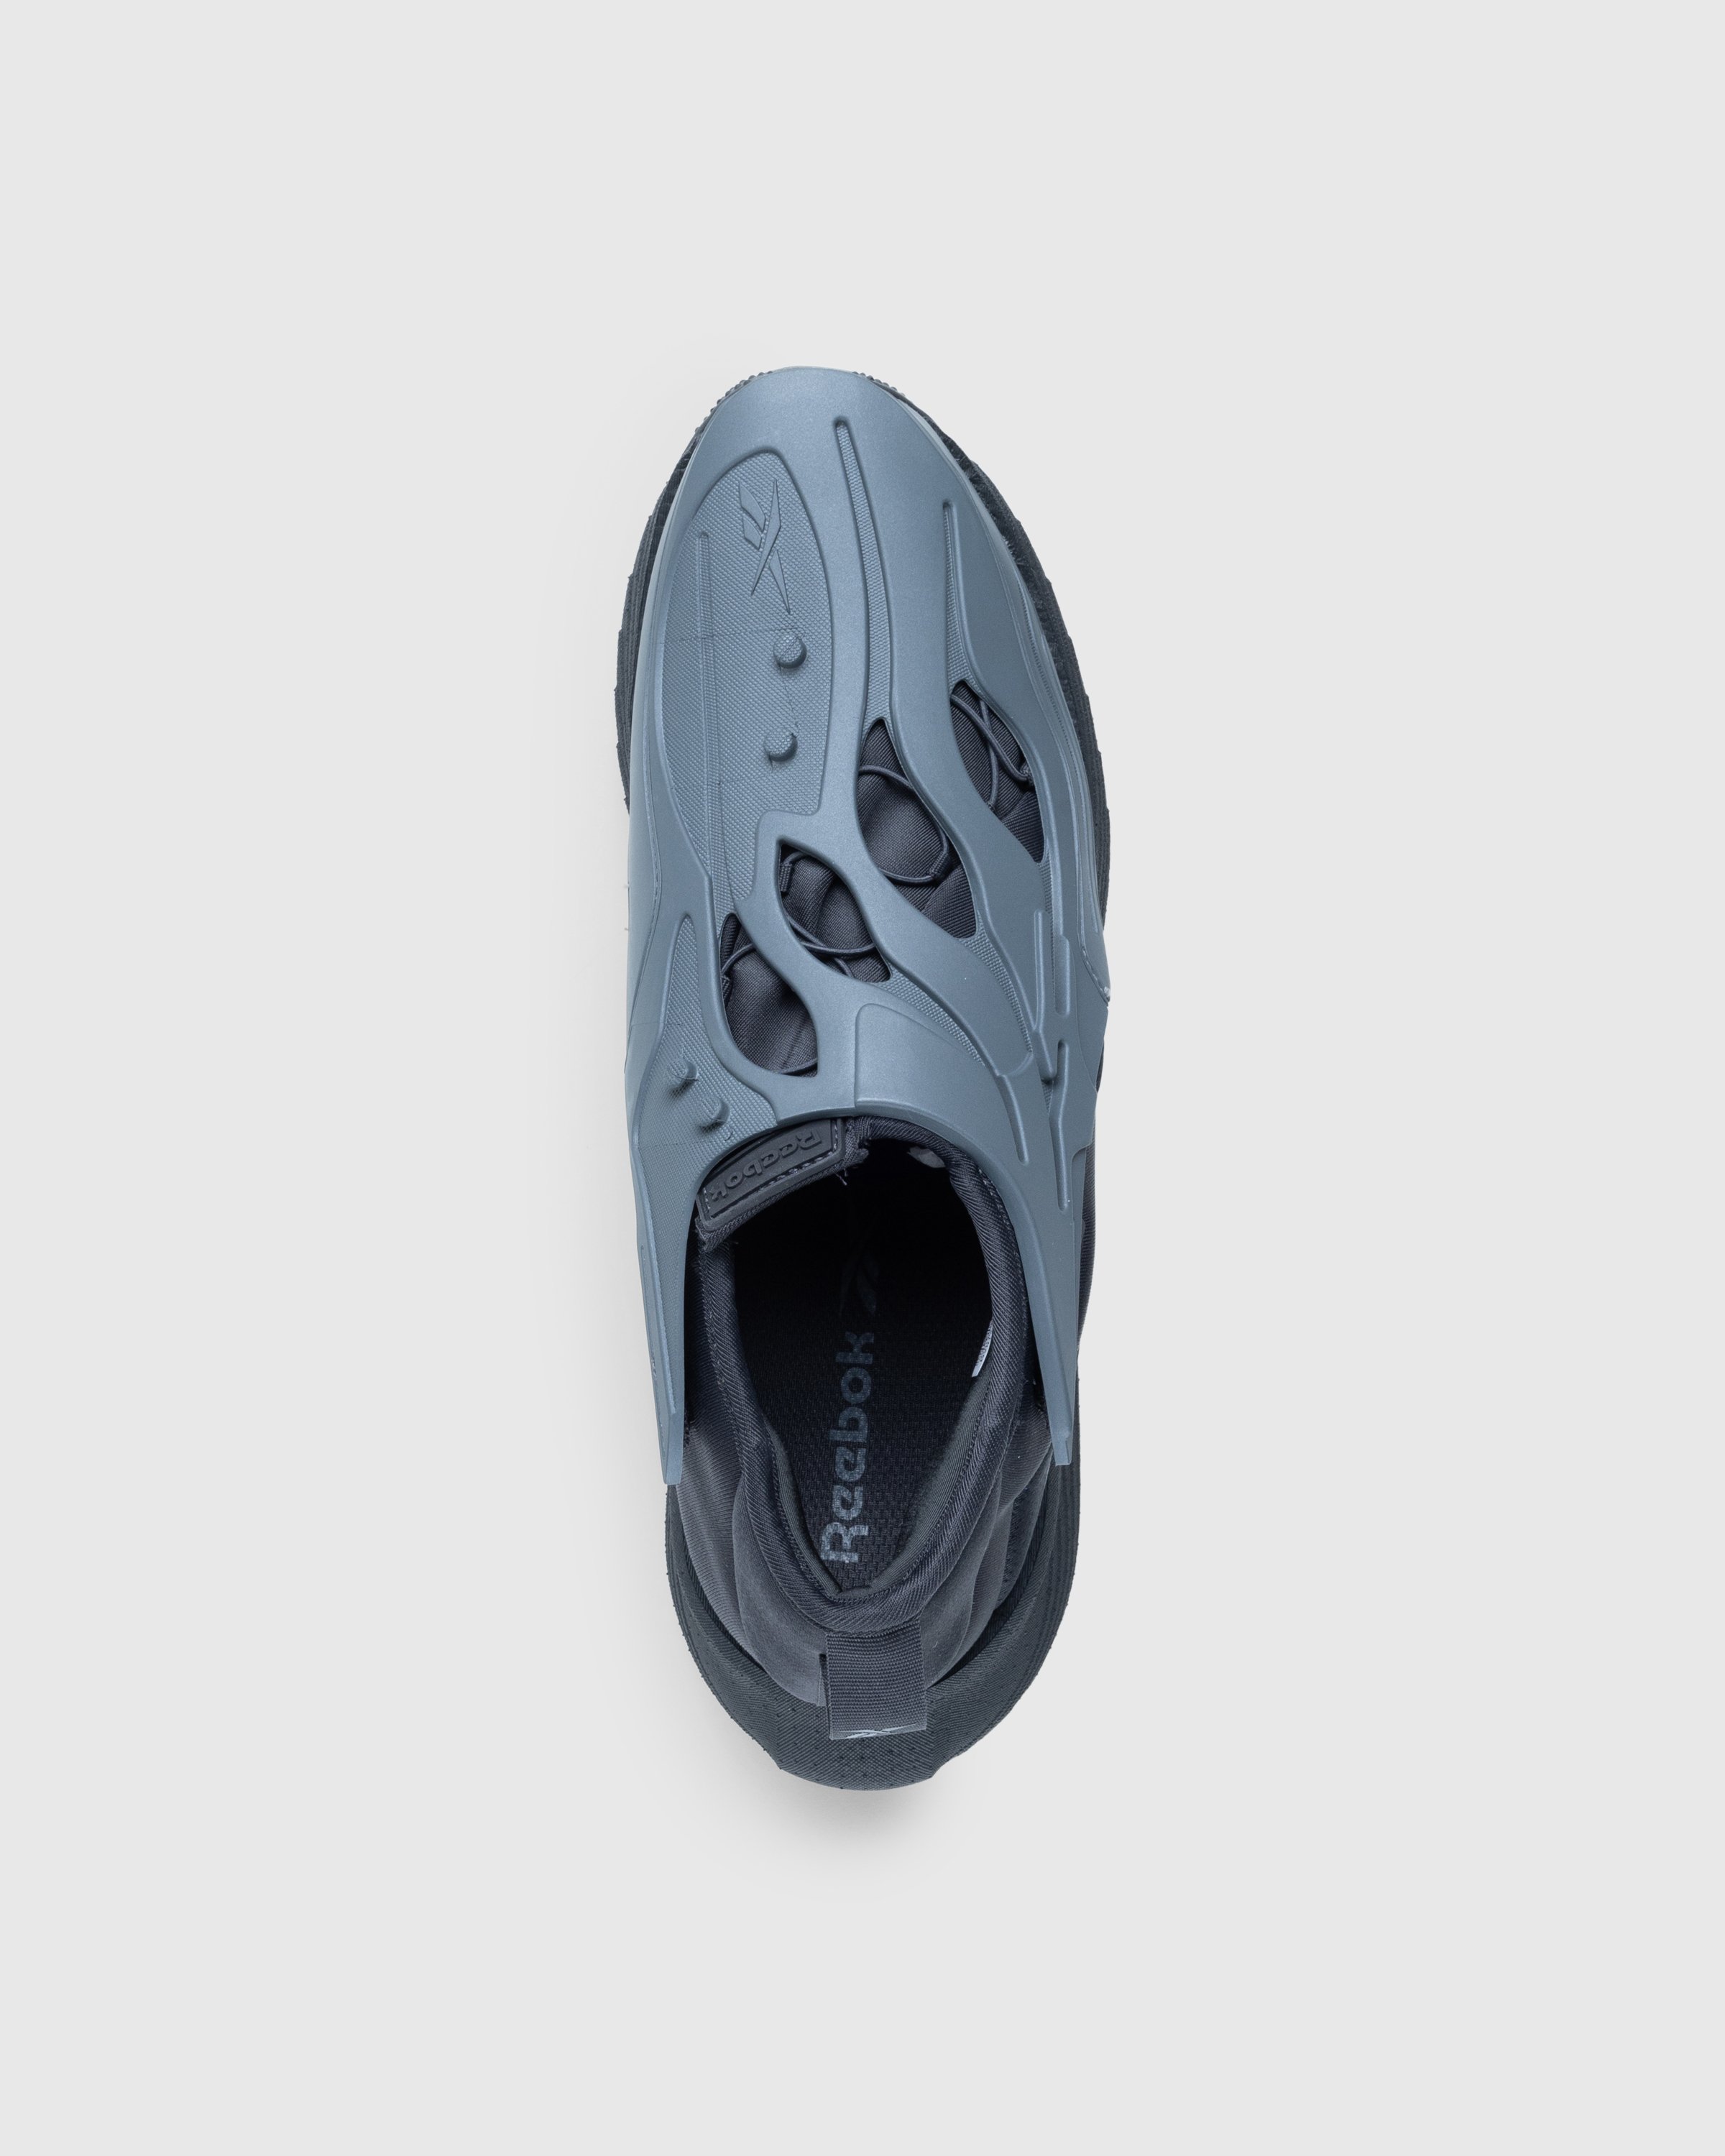 Reebok - FLOATRIDE BLACK/SILVER - Footwear - Black - Image 5